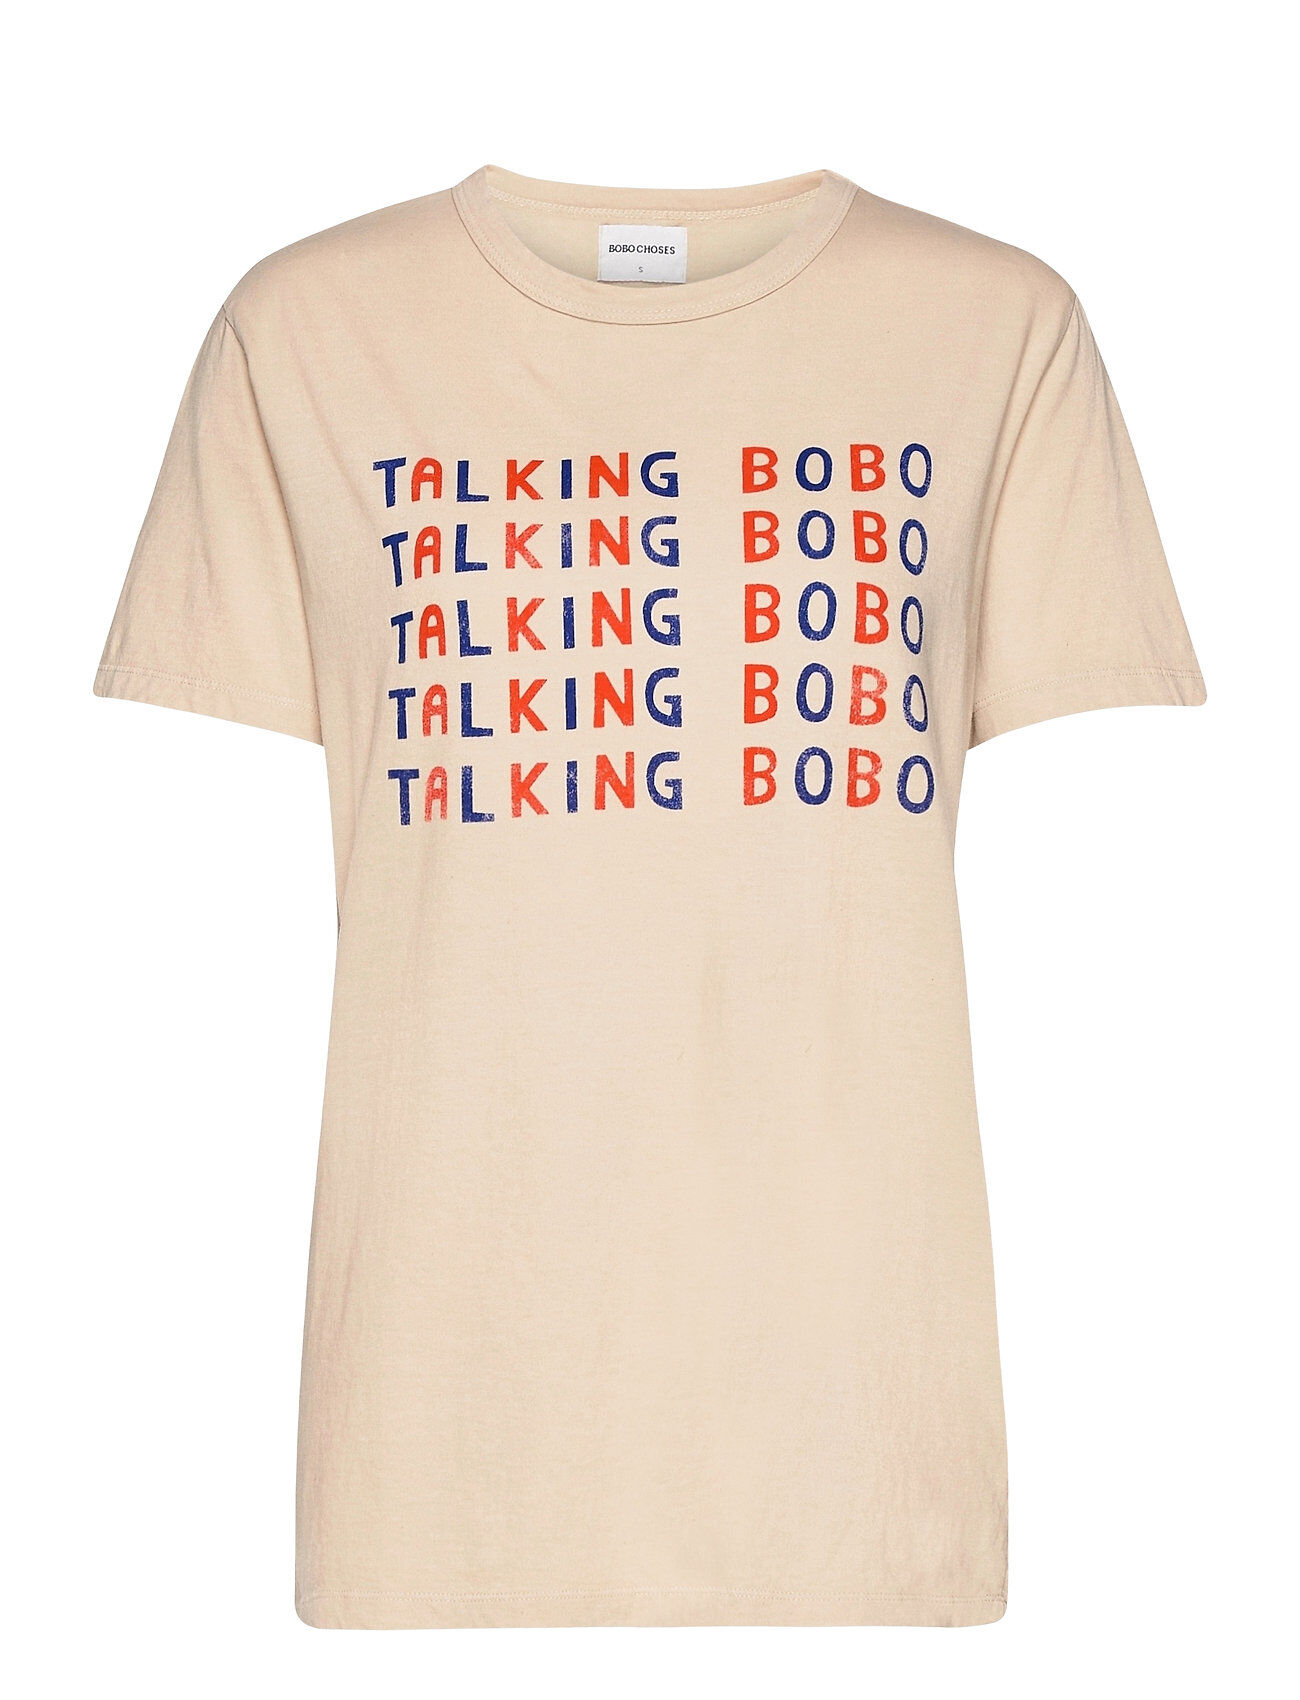 Bobo Choses Talking Bobo Organic Cotton T-Shirt T-shirts & Tops Short-sleeved Beige Bobo Choses